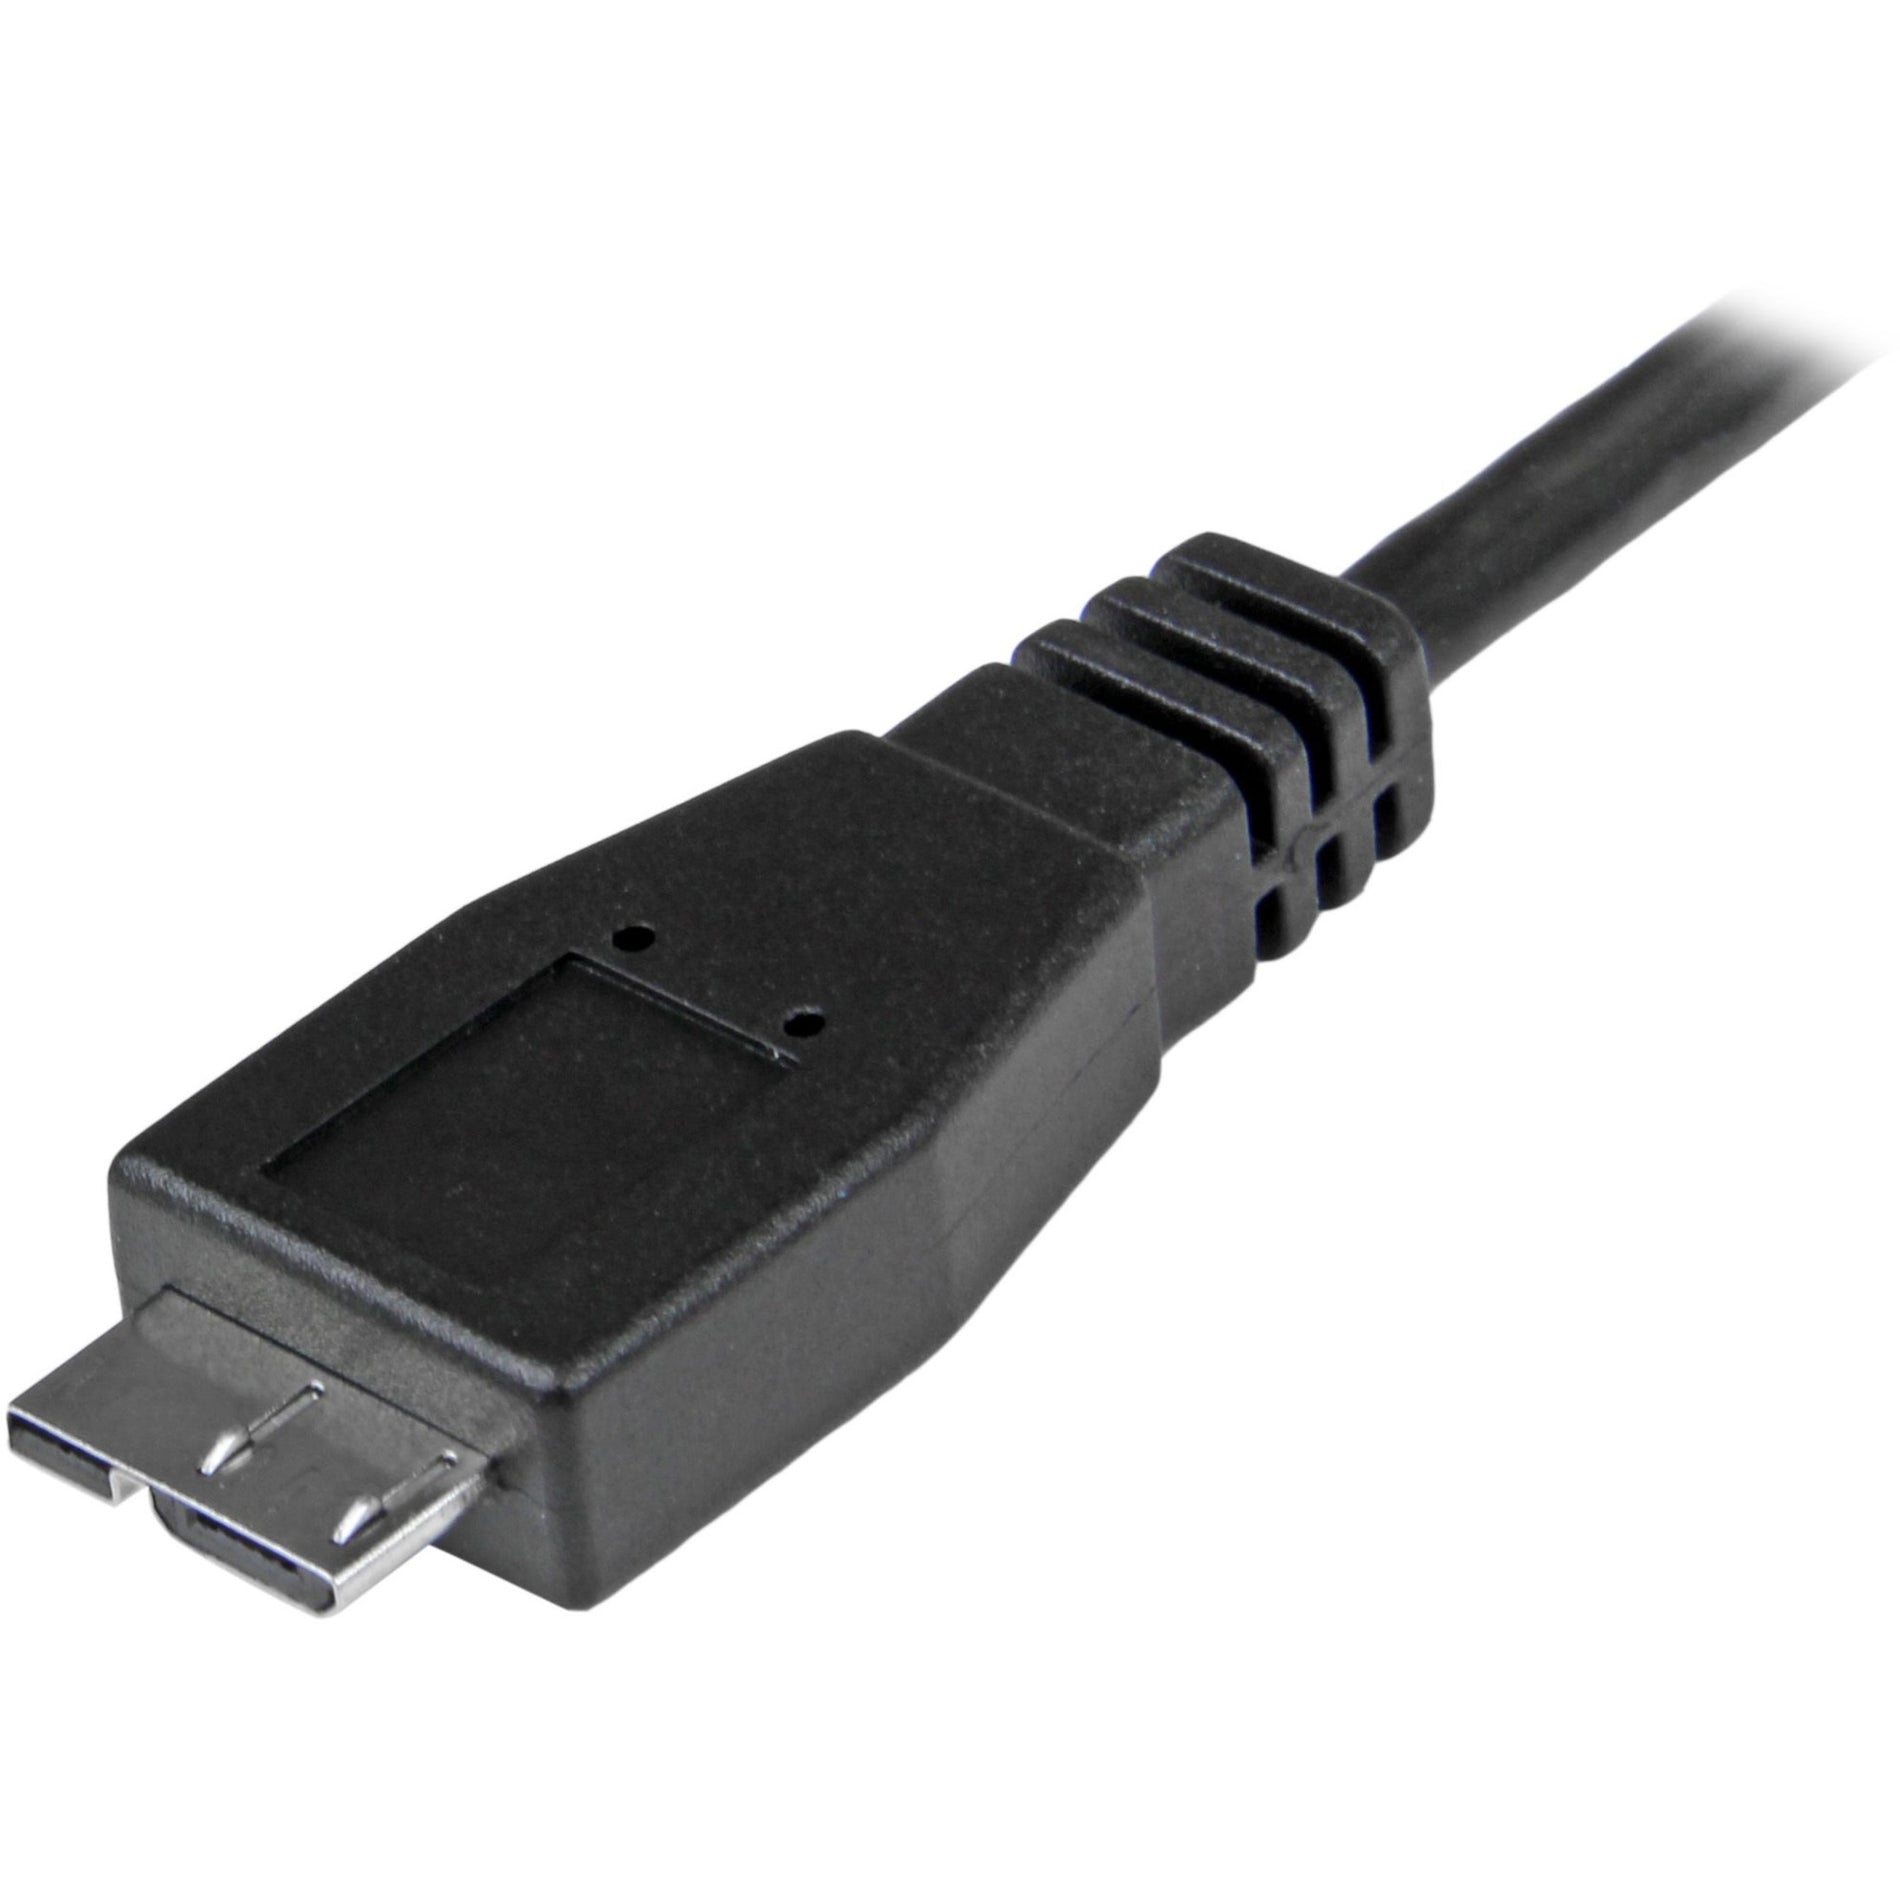 StarTech.com USB31CUB1M USB-C to Micro-B Cable - USB 3.1 Gen 2 10Gbps, 1m (3ft)